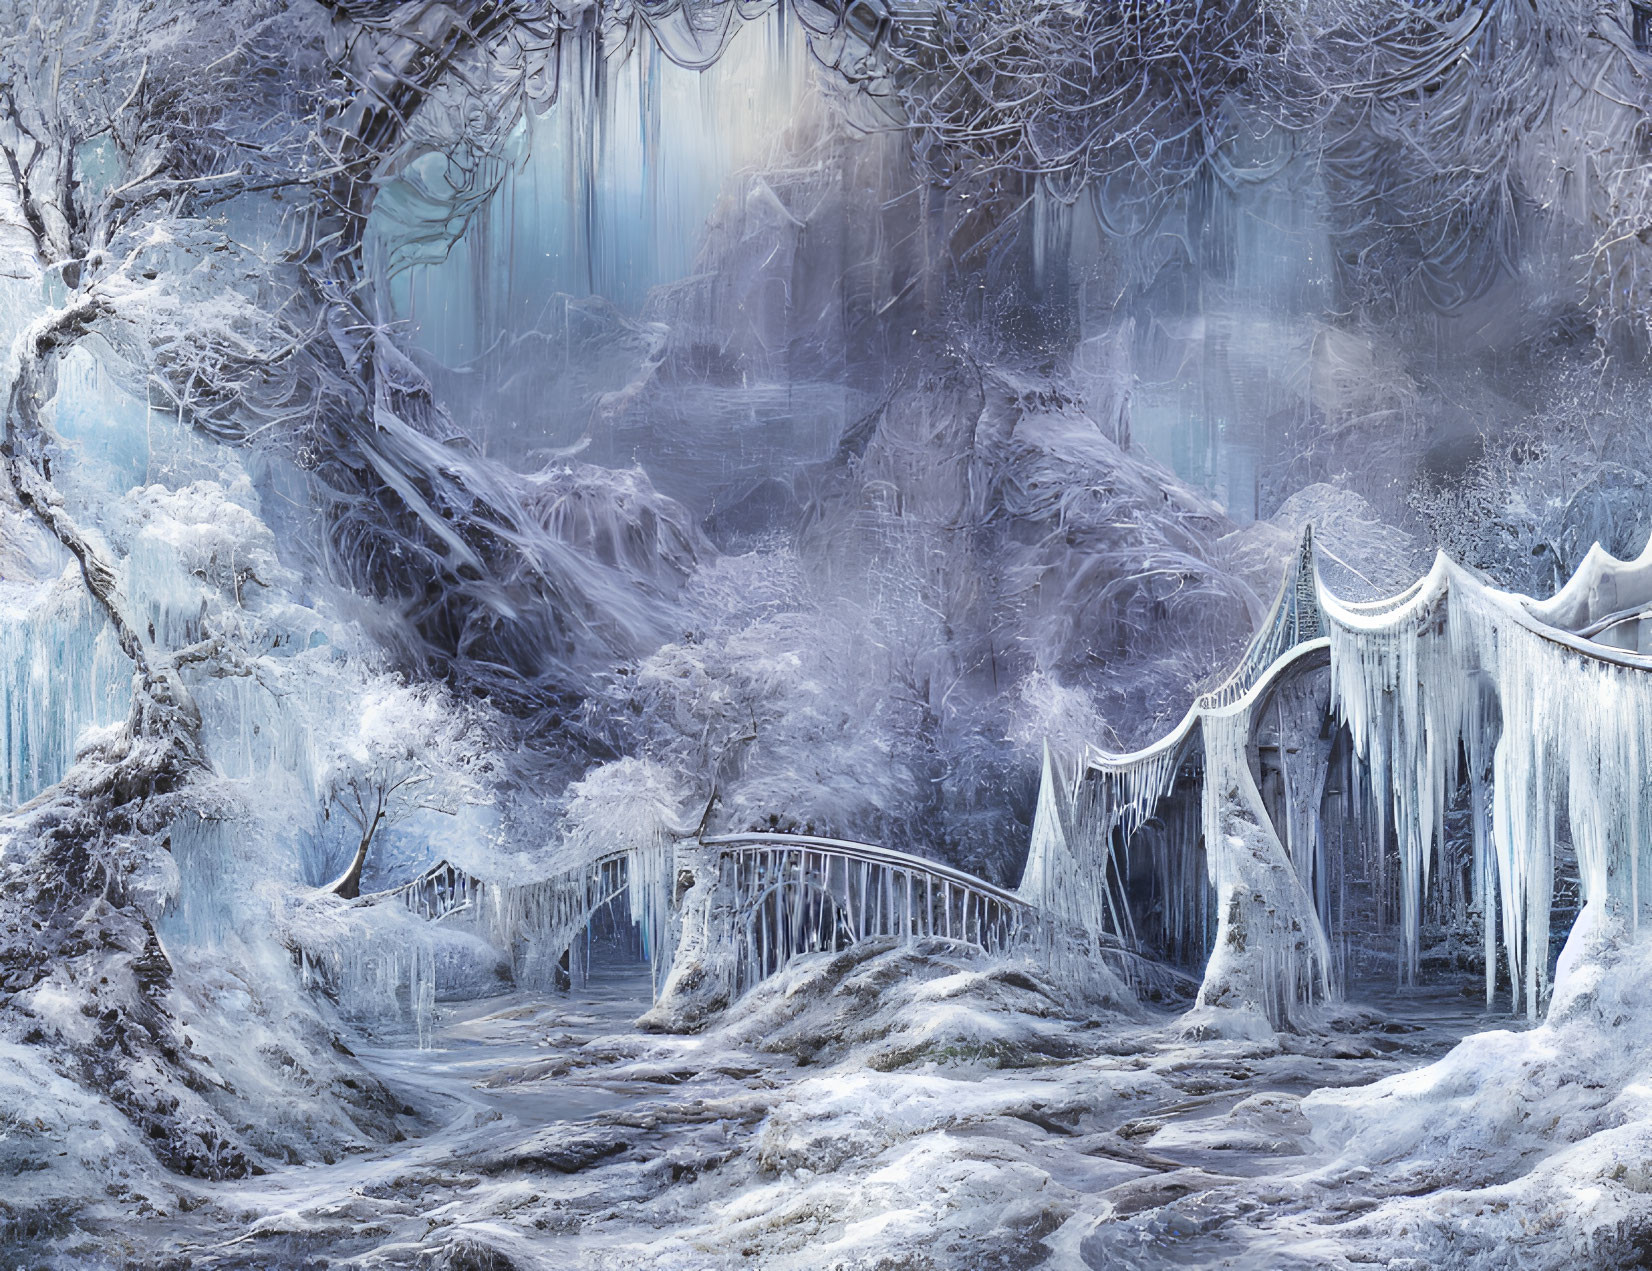 Frozen bridge in snowy, icy landscape with mystical blue glow